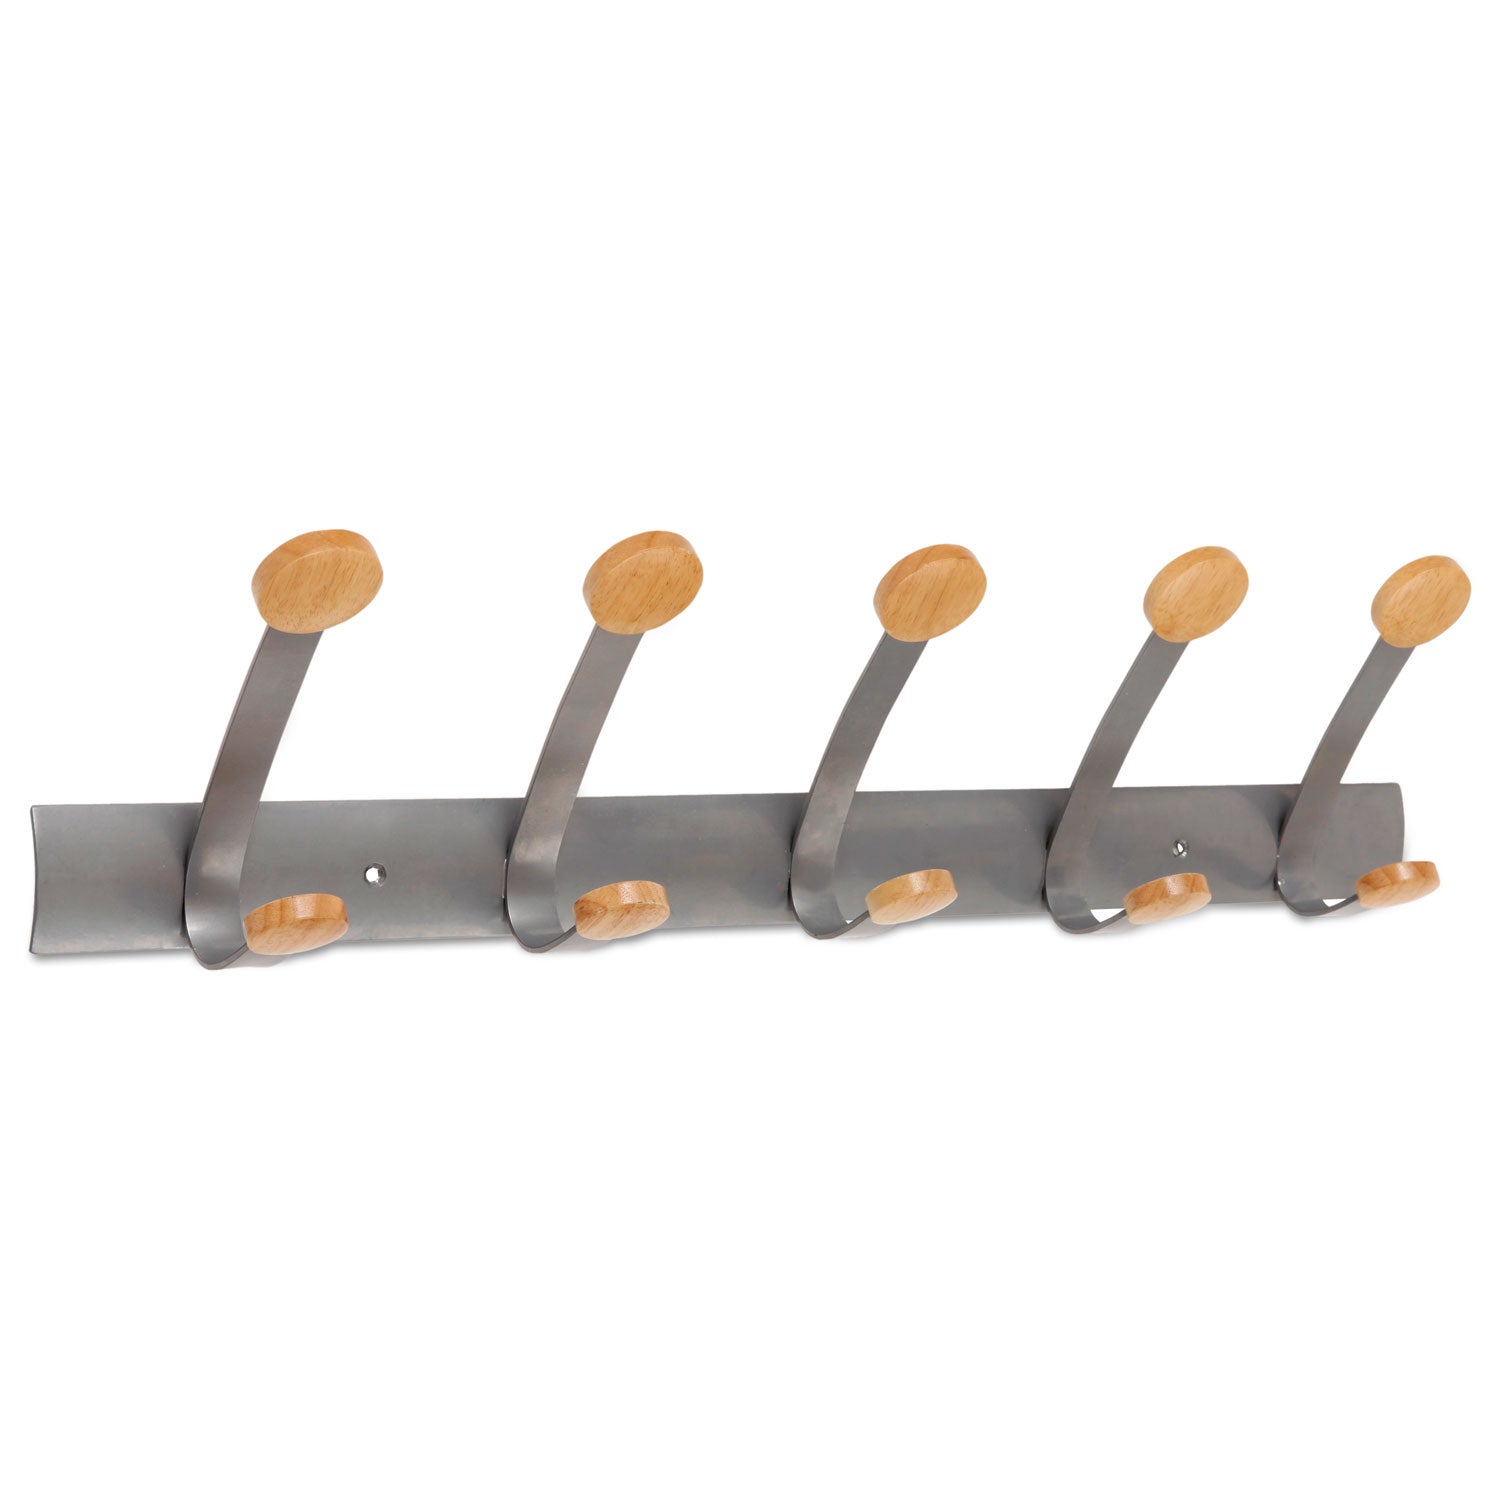 Wooden Coat Hook, Five Wood Peg Wall Rack, Brown/Silver, 45 lb Capacity - 